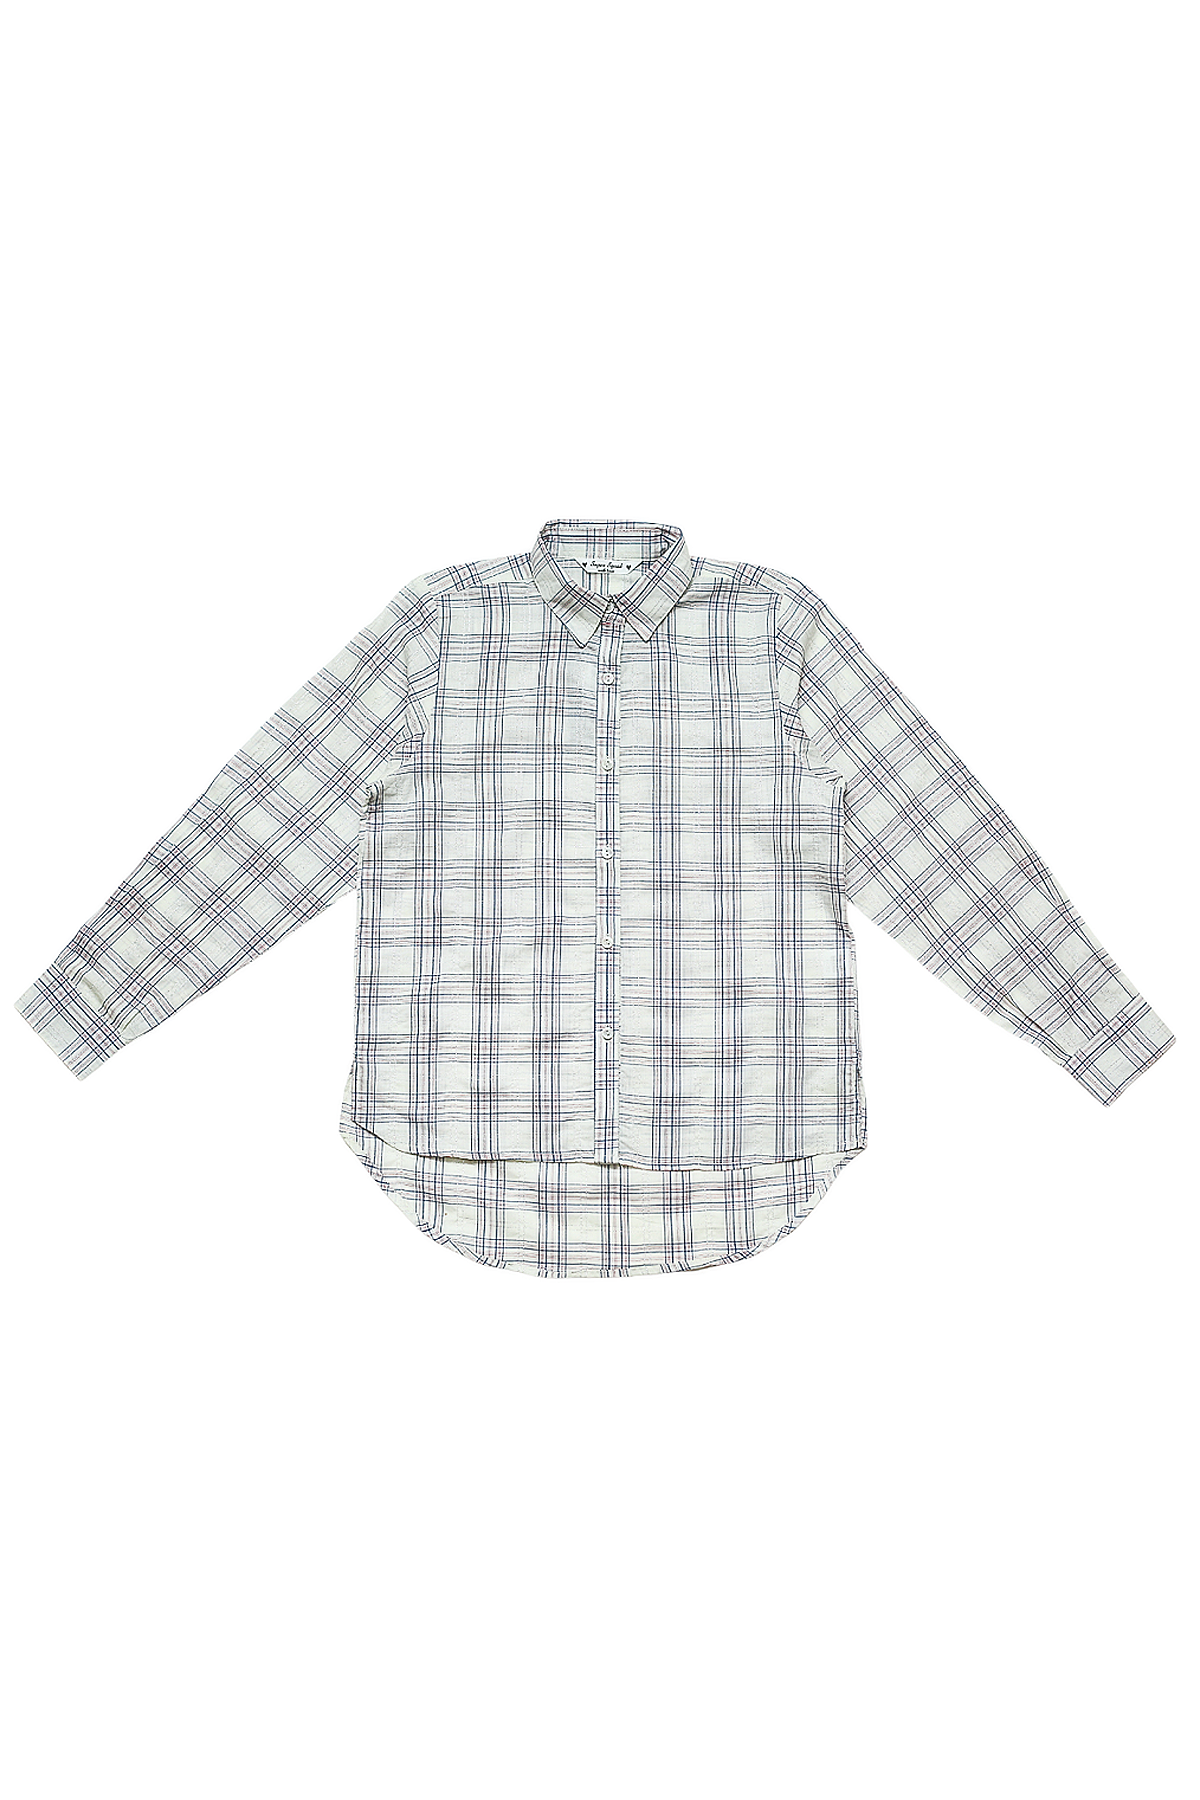 Button-Down Collar Shirt (SSGTU-907)